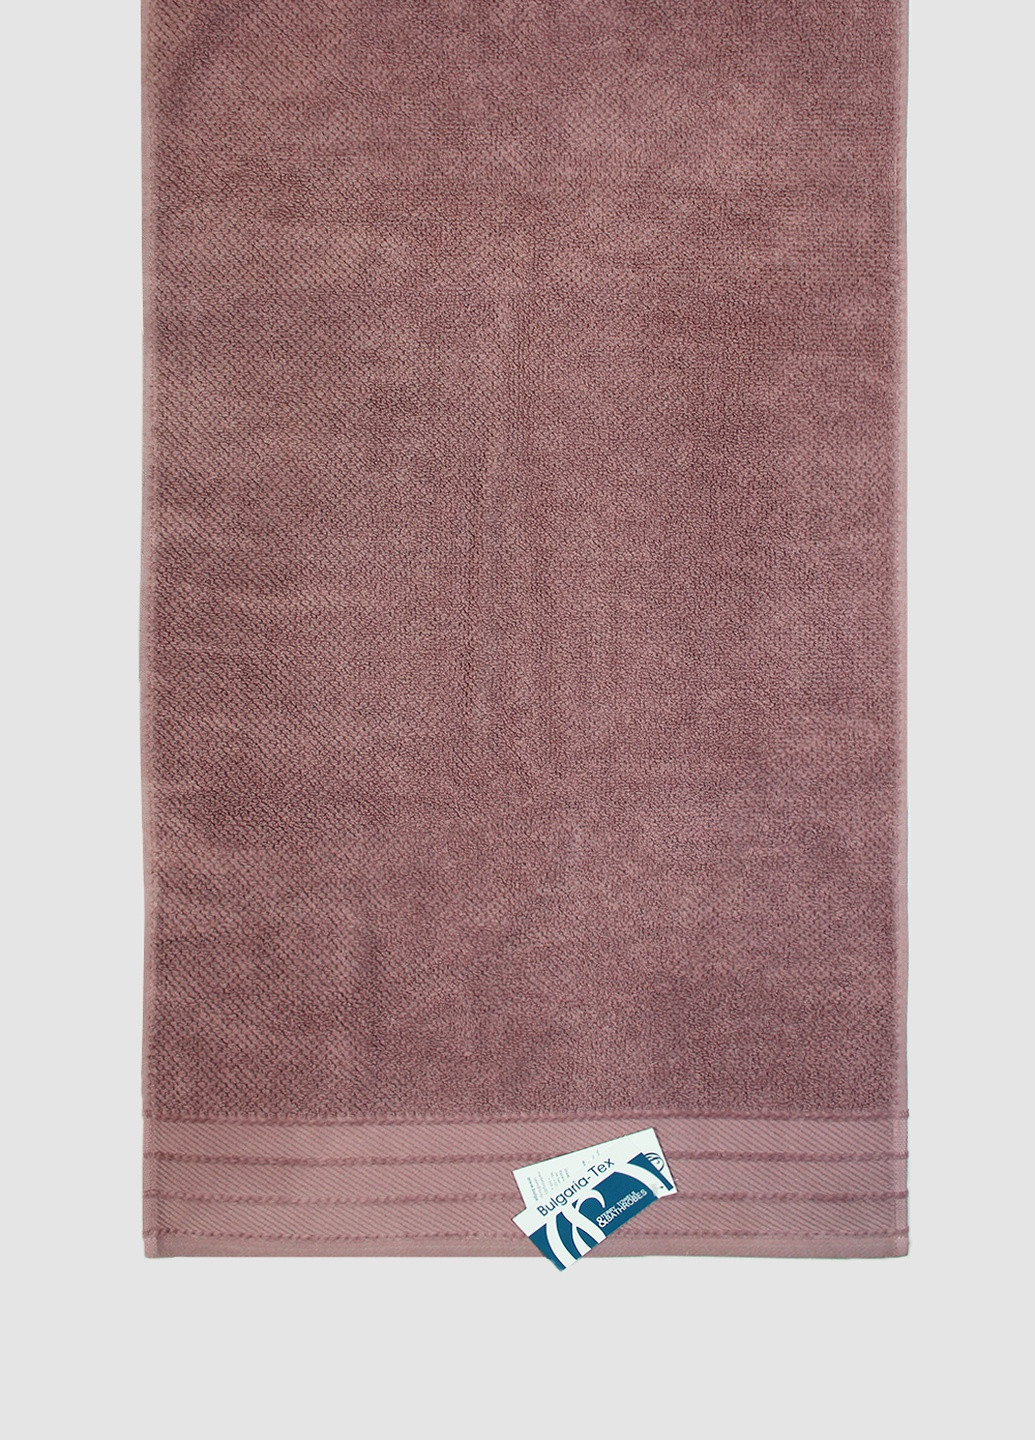 Bulgaria-Tex полотенце махровое riga, пепел розы, размер 70x140 cm темно-розовый производство - Болгария